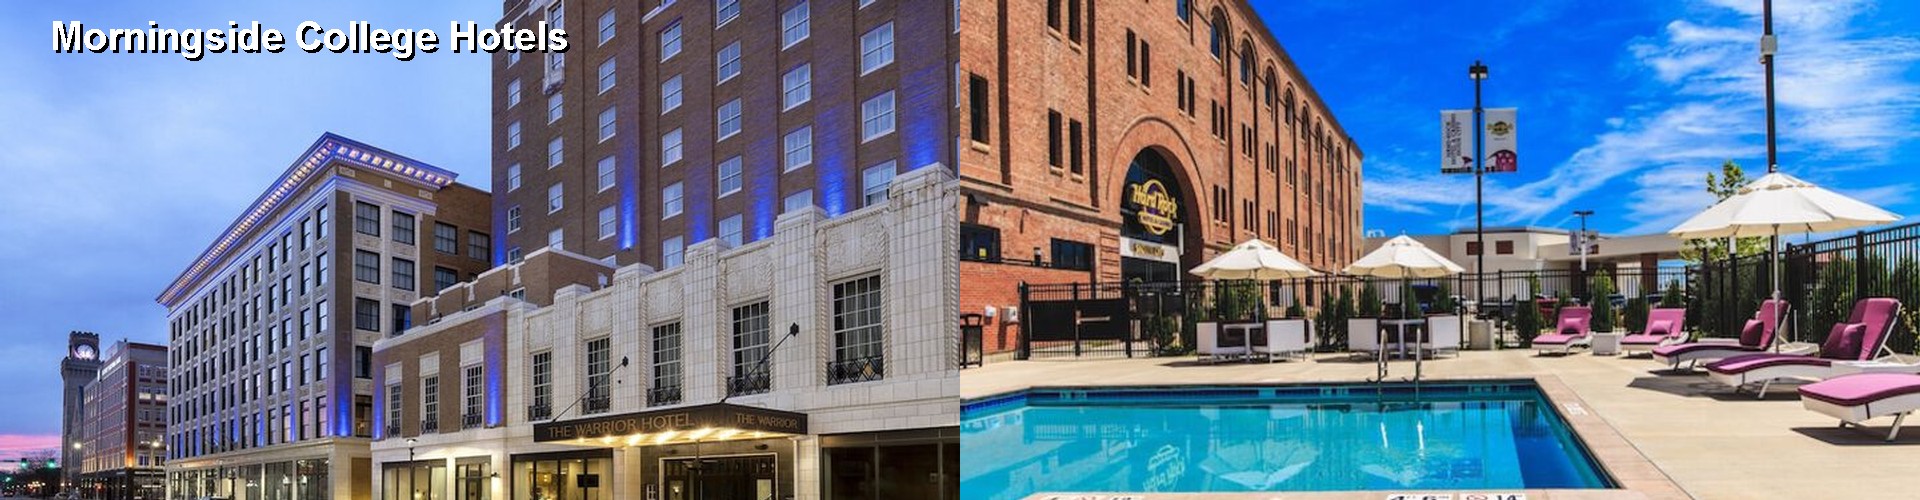 5 Best Hotels near Morningside College